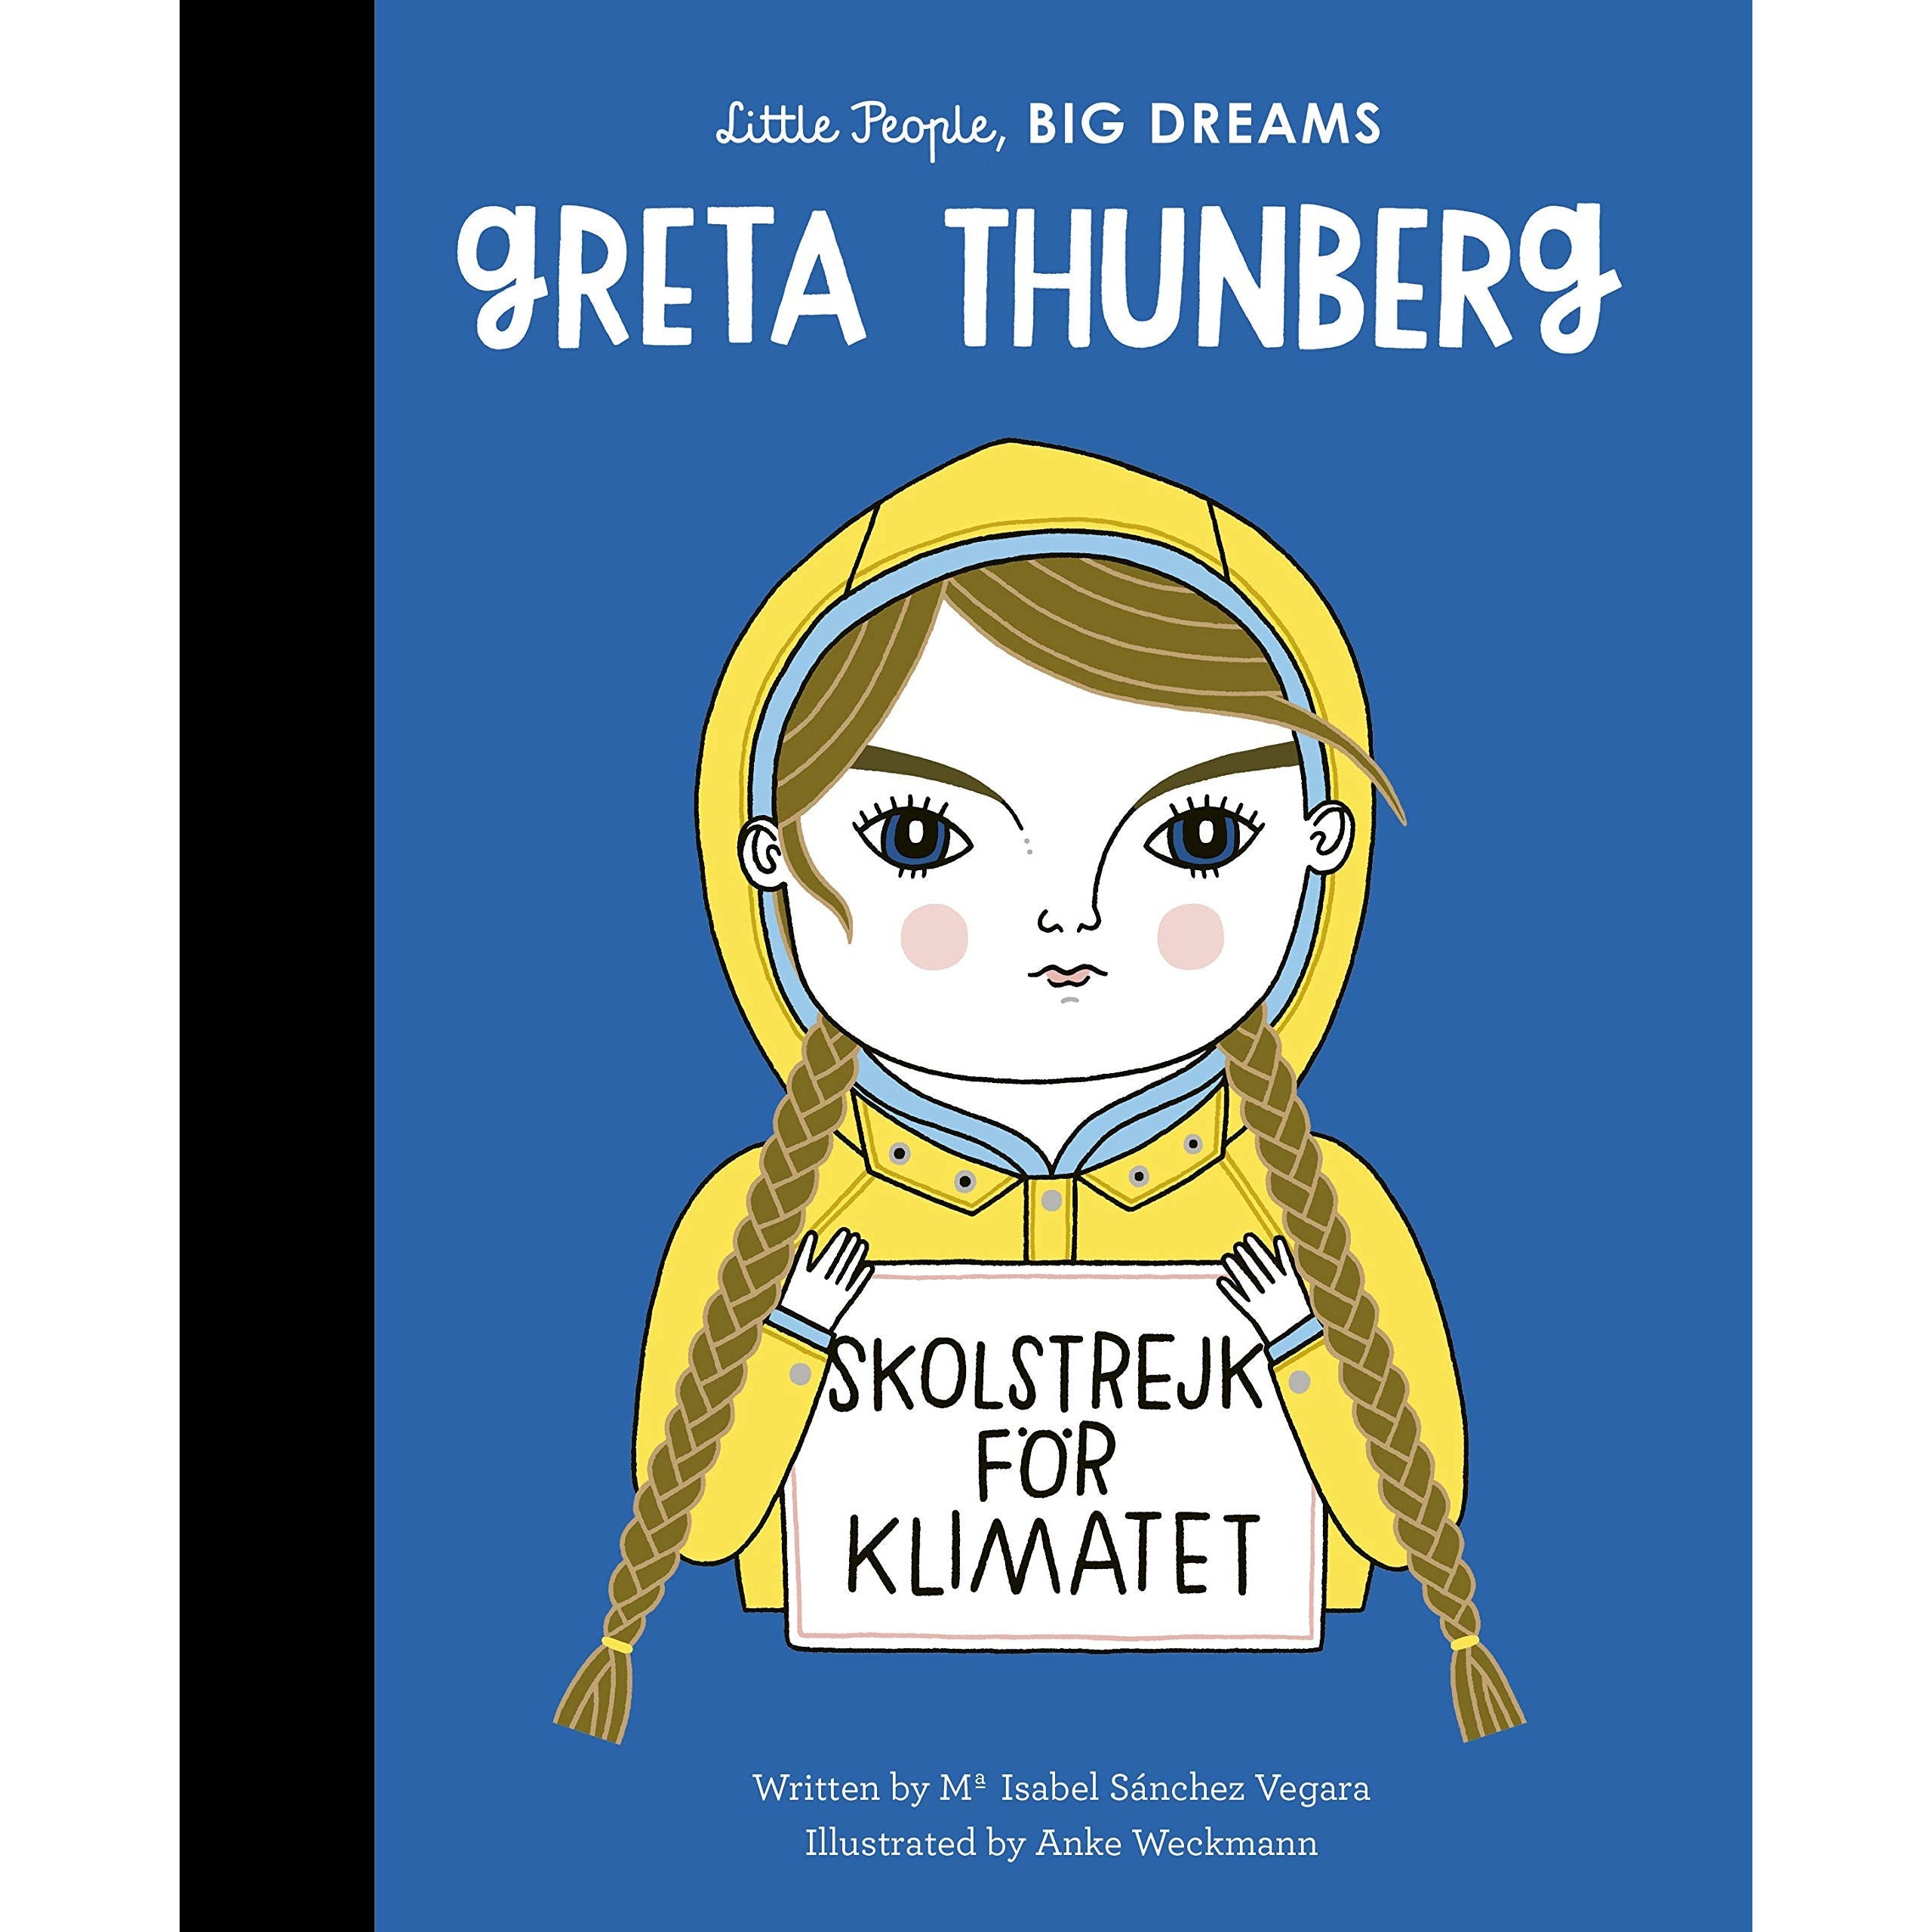 Greta Thunberg - My First Little People BIG DREAMS